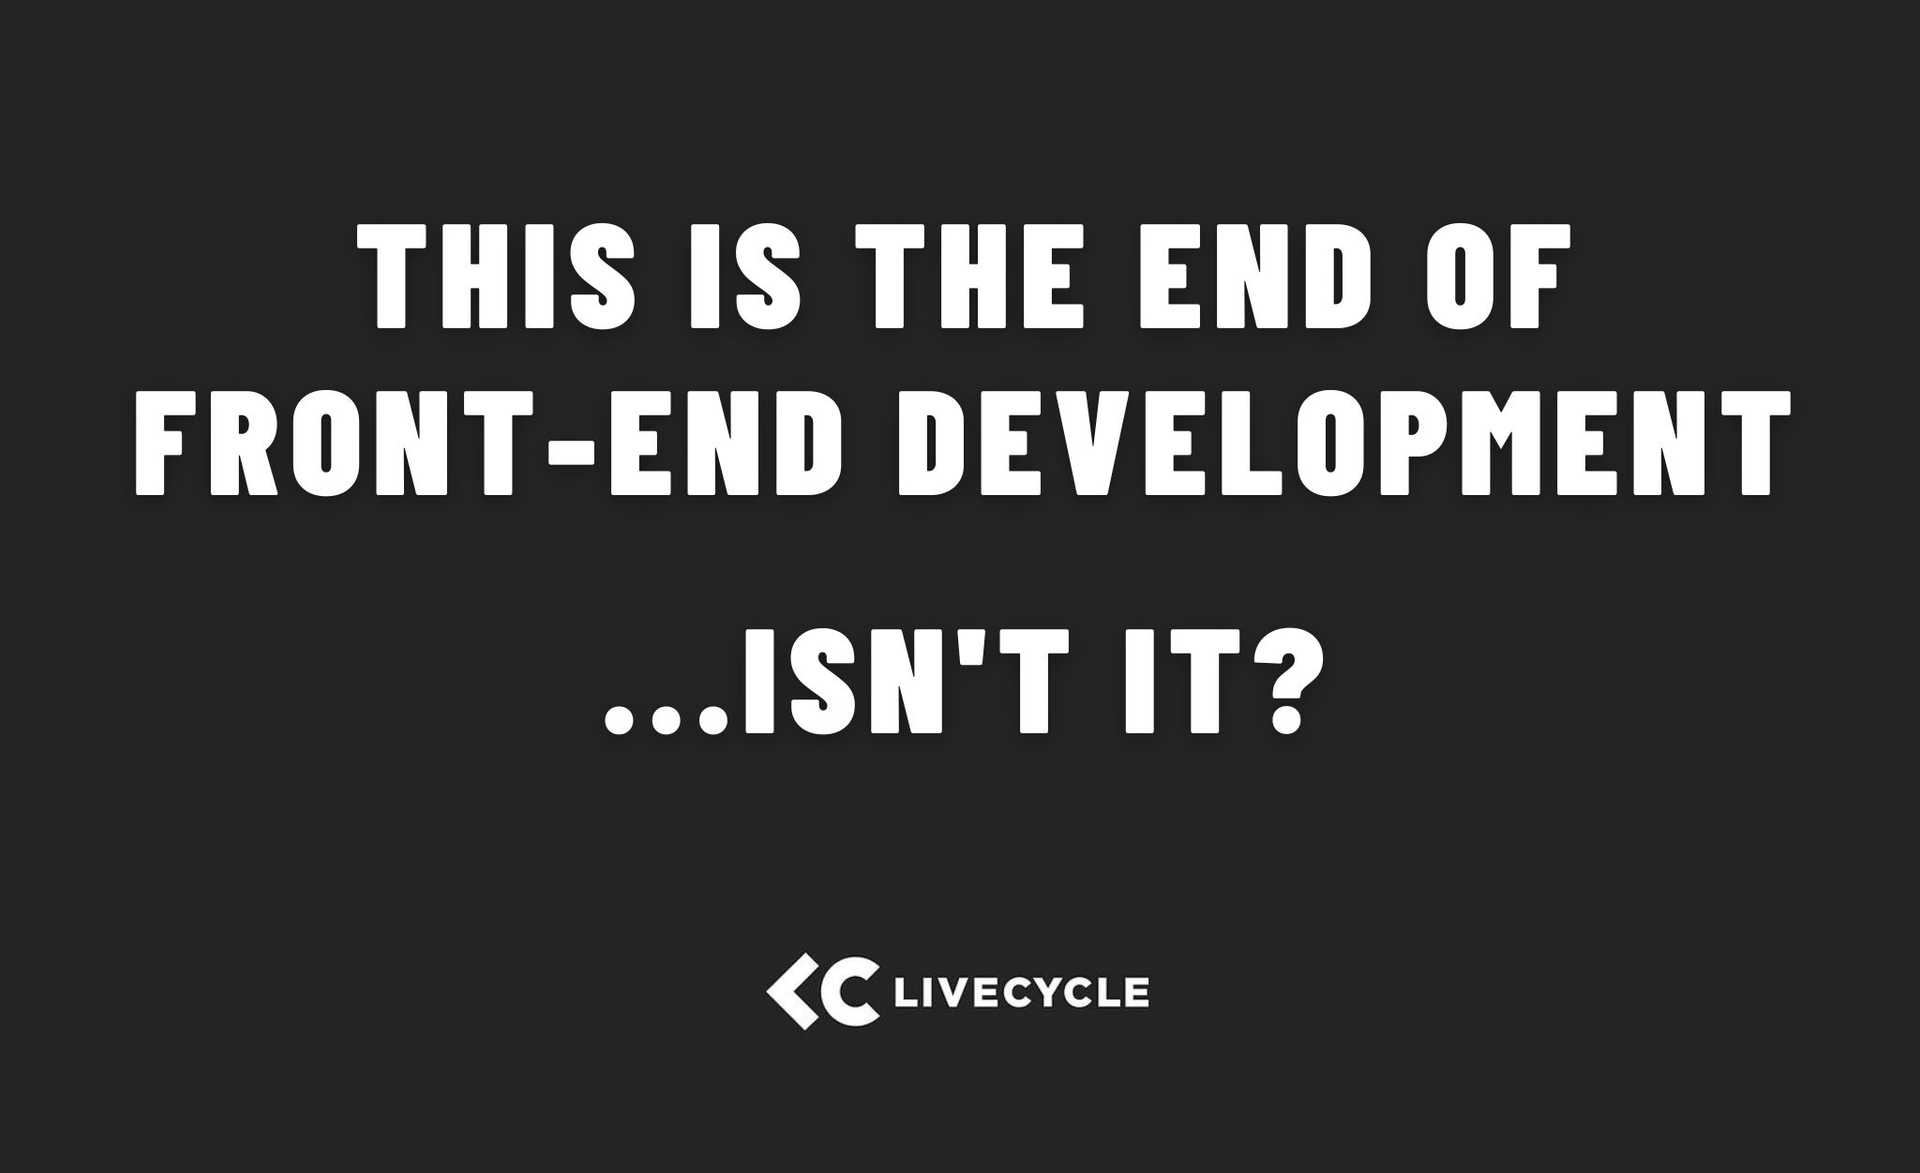 Front end development is ending. Isn't it??